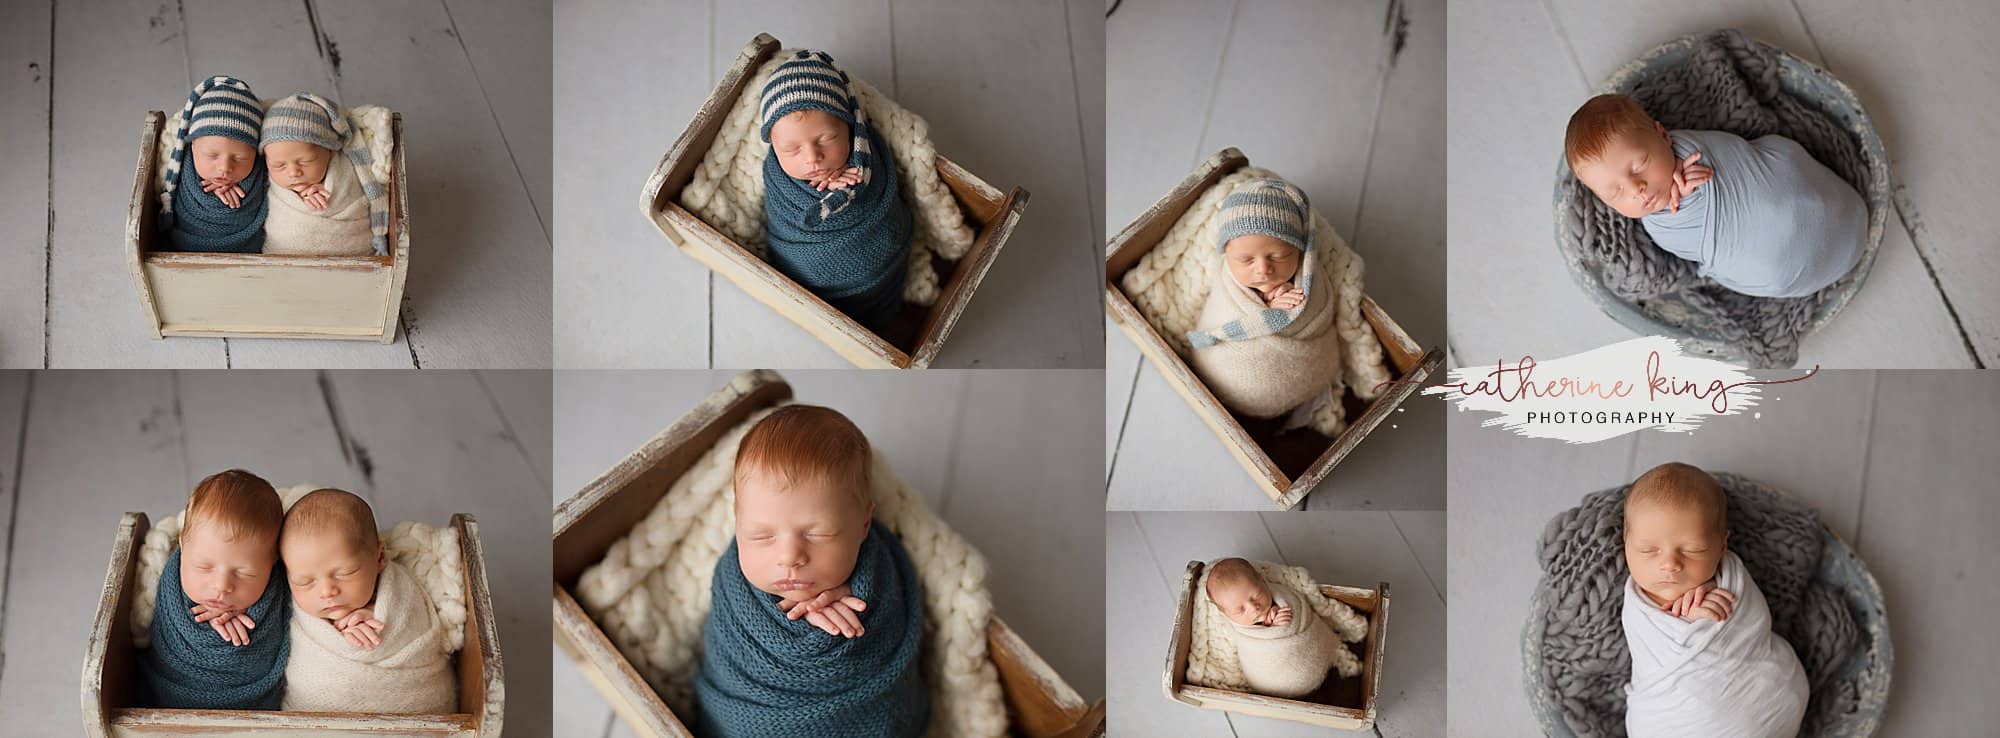 Newborn twin photography in Madison CT